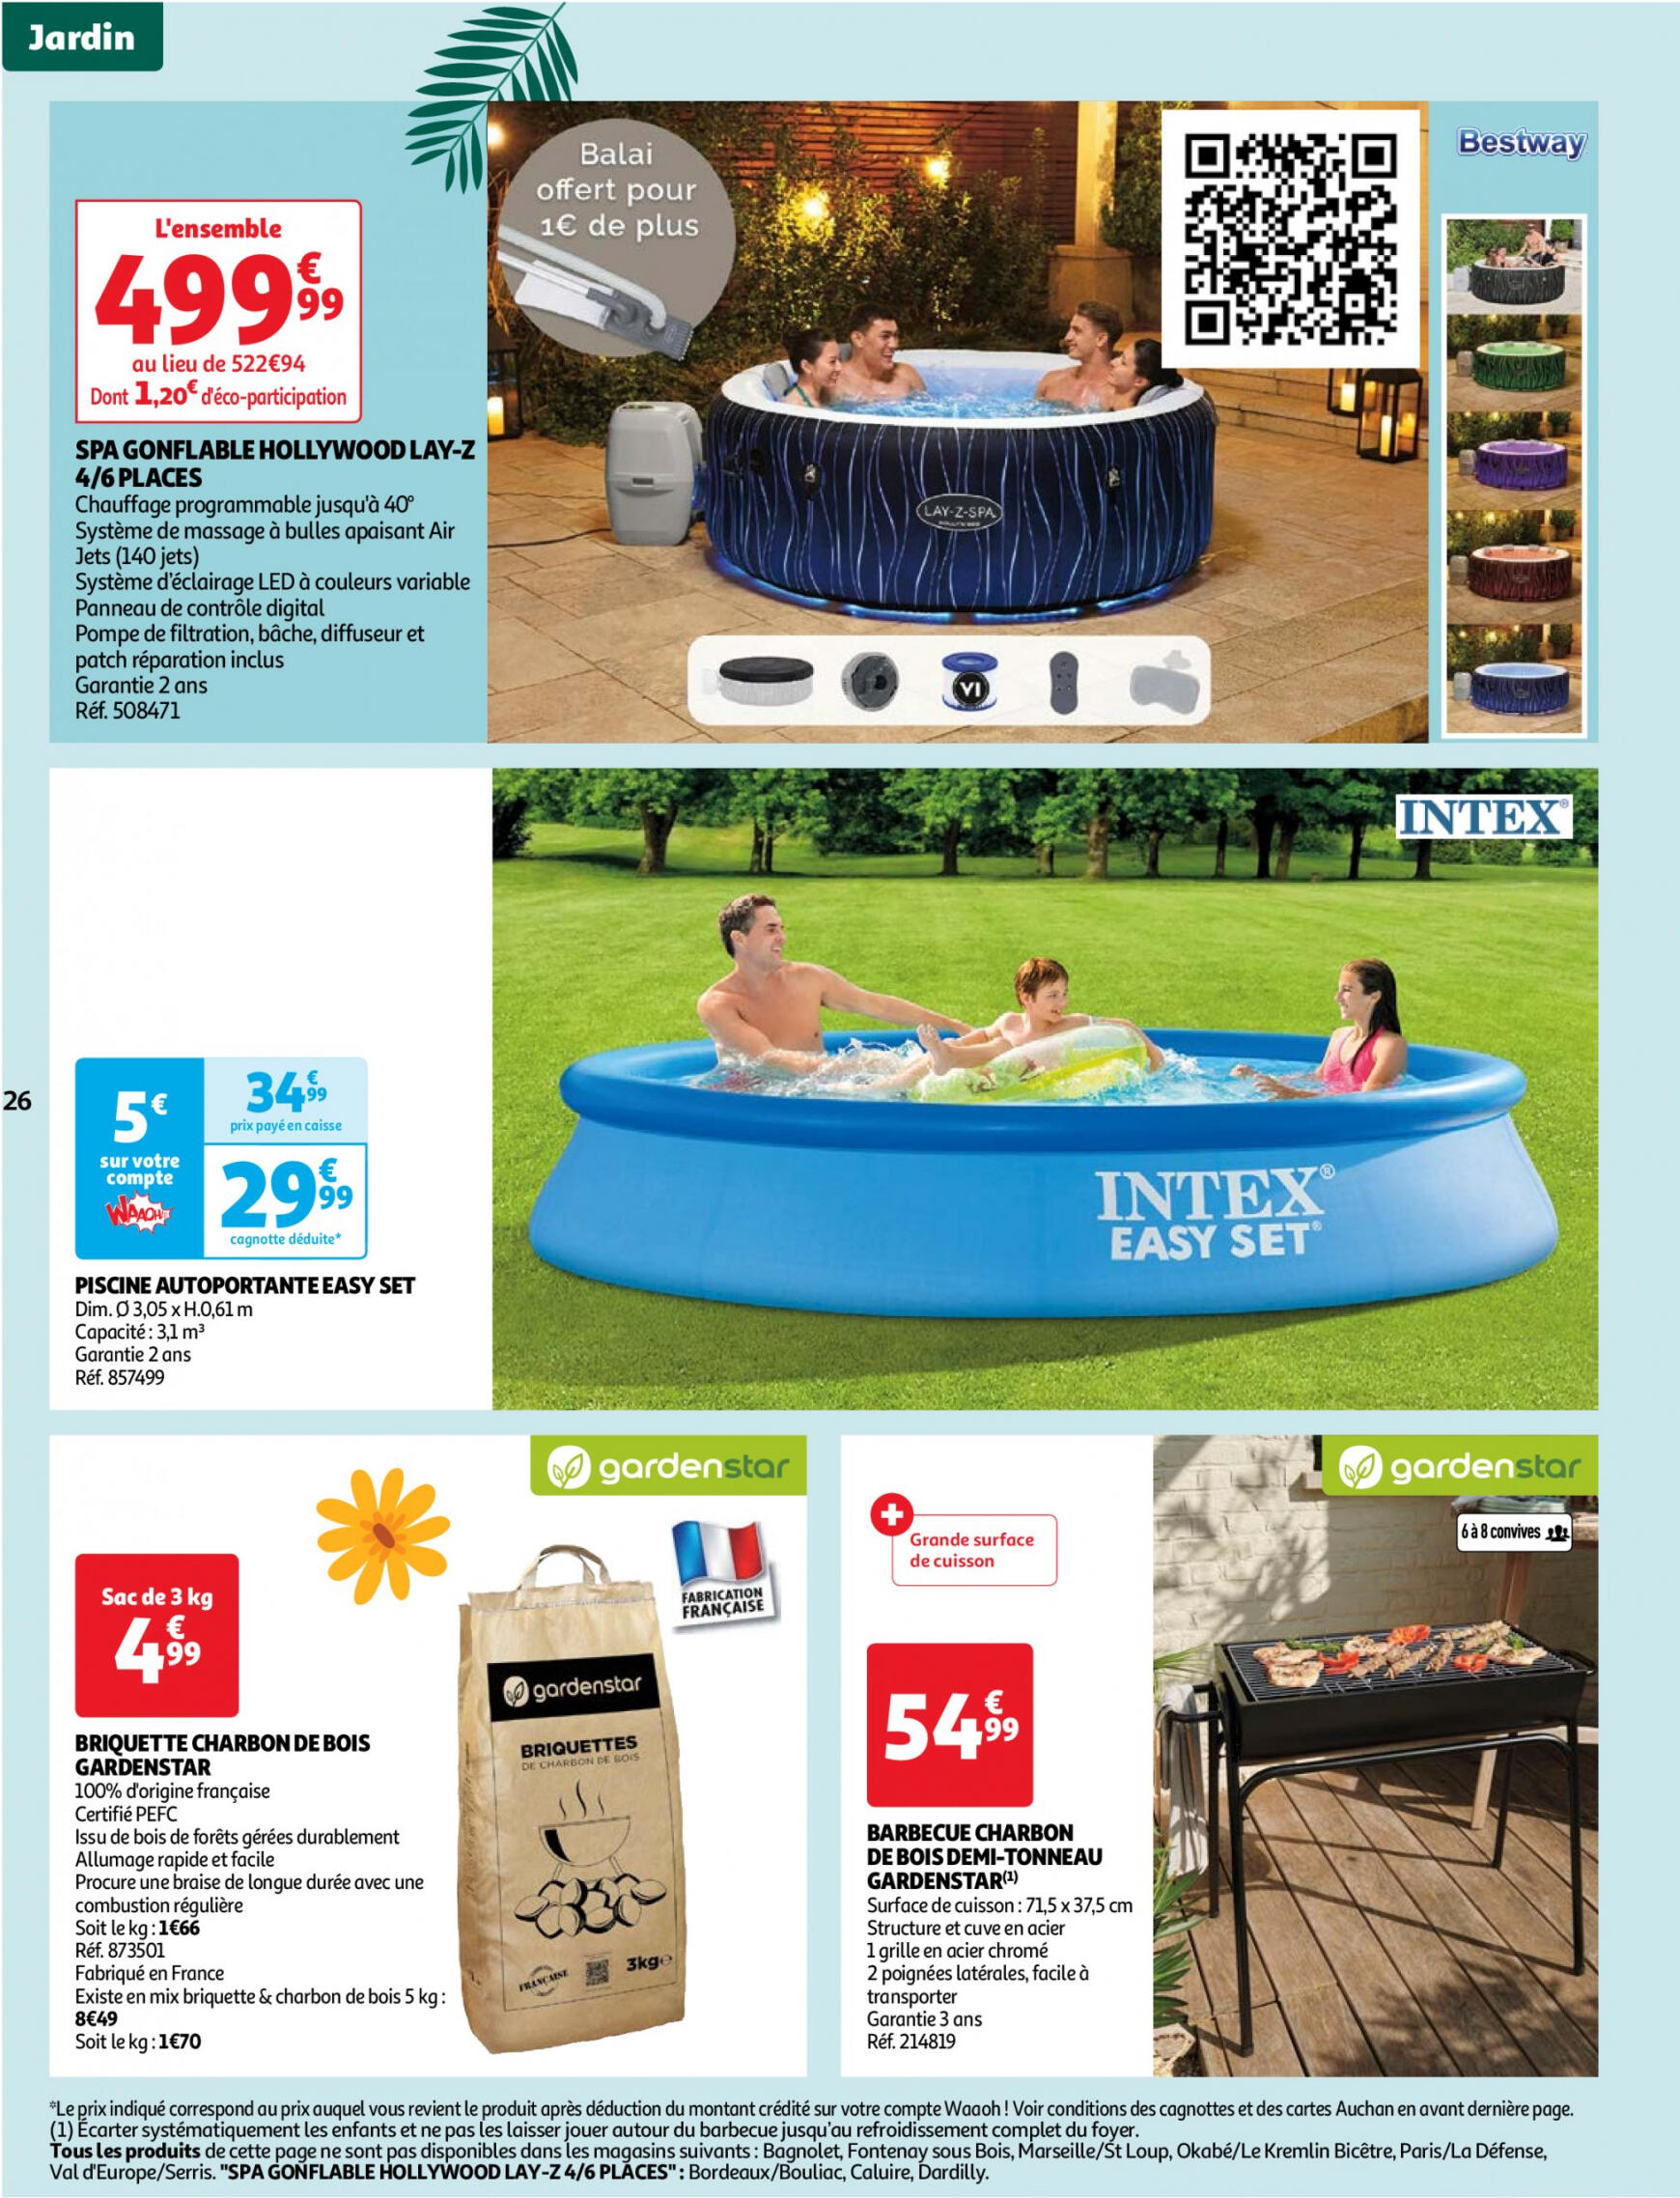 auchan - Auchan - Merci maman folder huidig 14.05. - 26.05. - page: 26